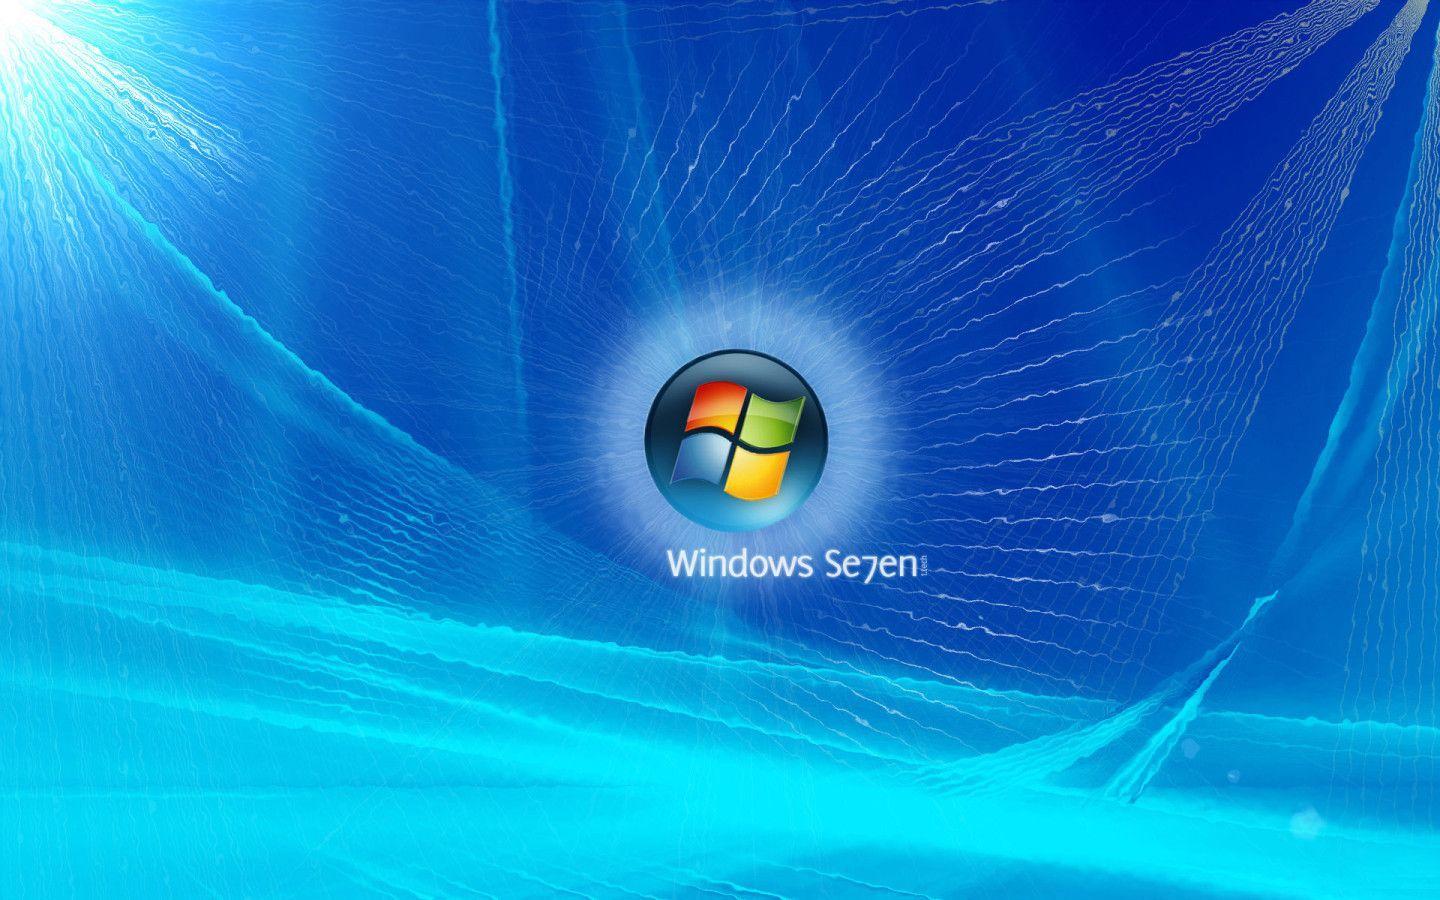 microsoft windows 7 wallpaper desktop background